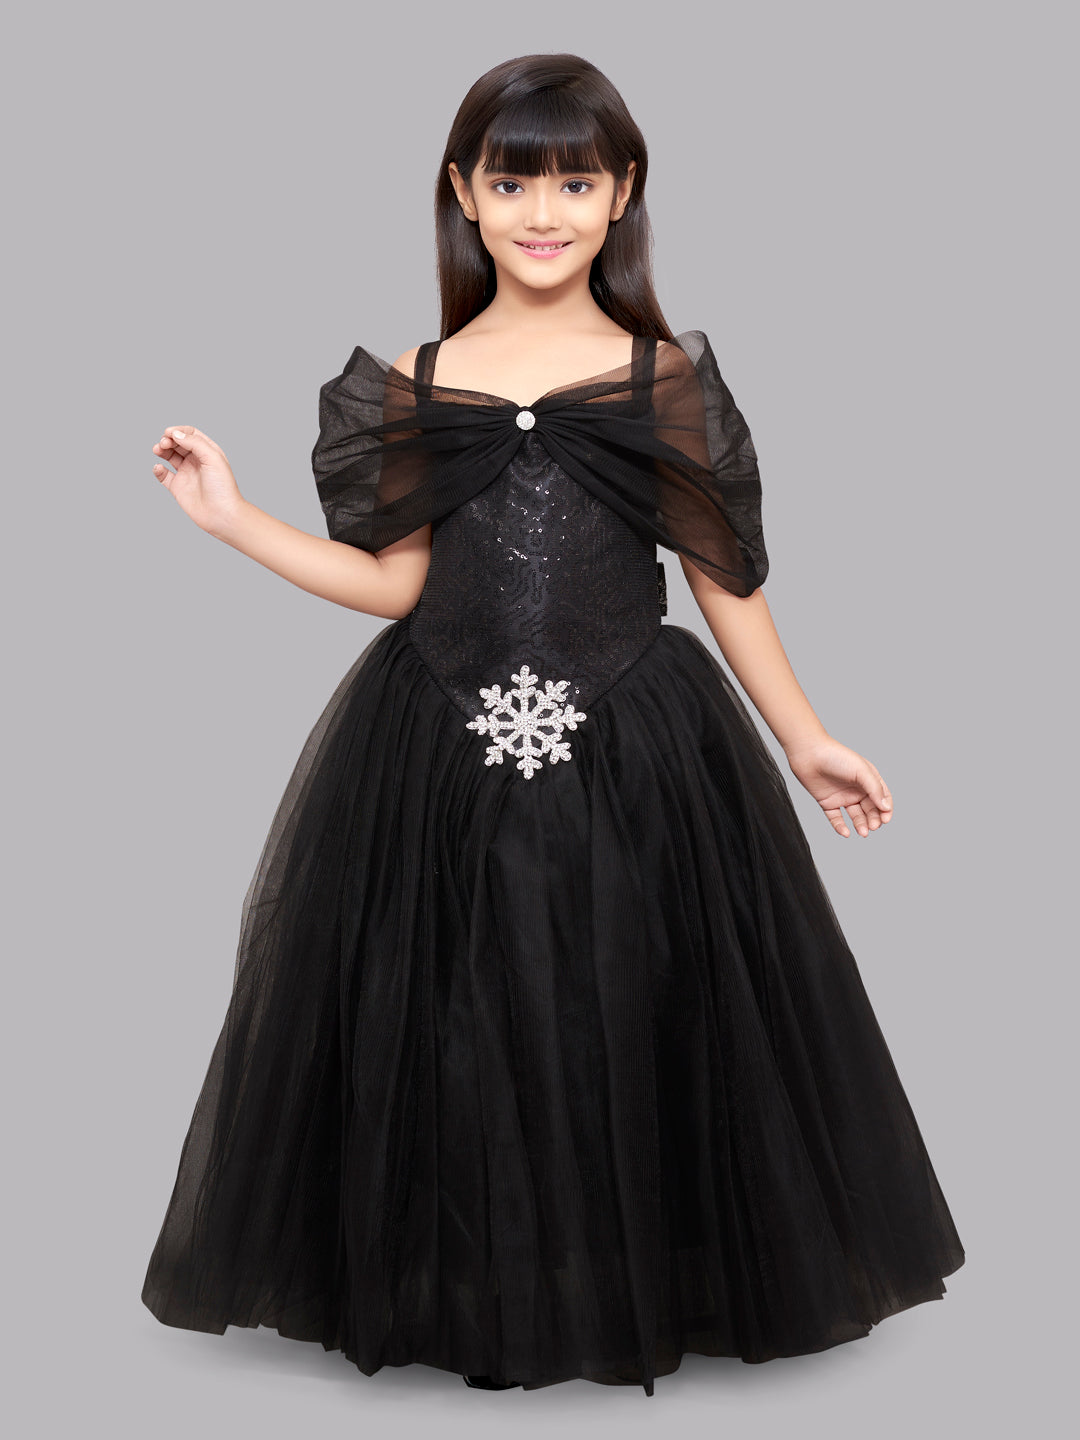 kiyan enterprise Women Gown Black Dress - Buy kiyan enterprise Women Gown  Black Dress Online at Best Prices in India | Flipkart.com